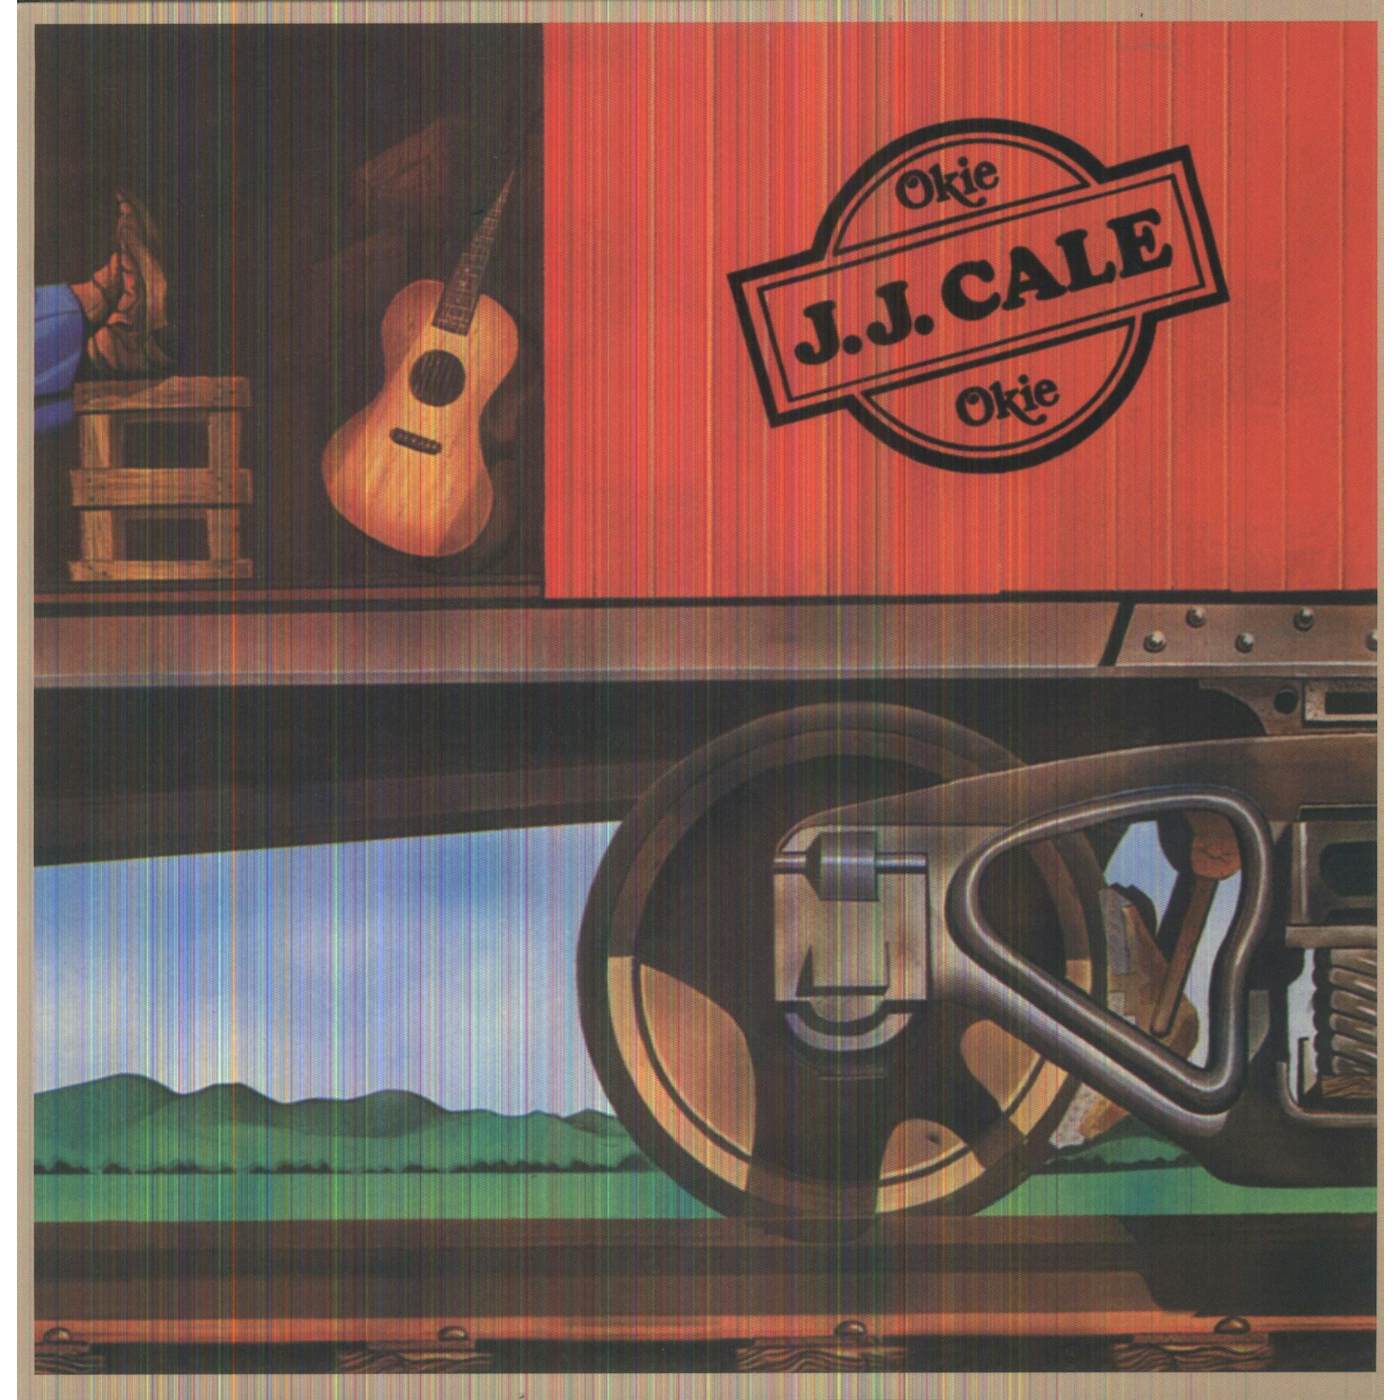 J.J. Cale OKIE (180G) Vinyl Record